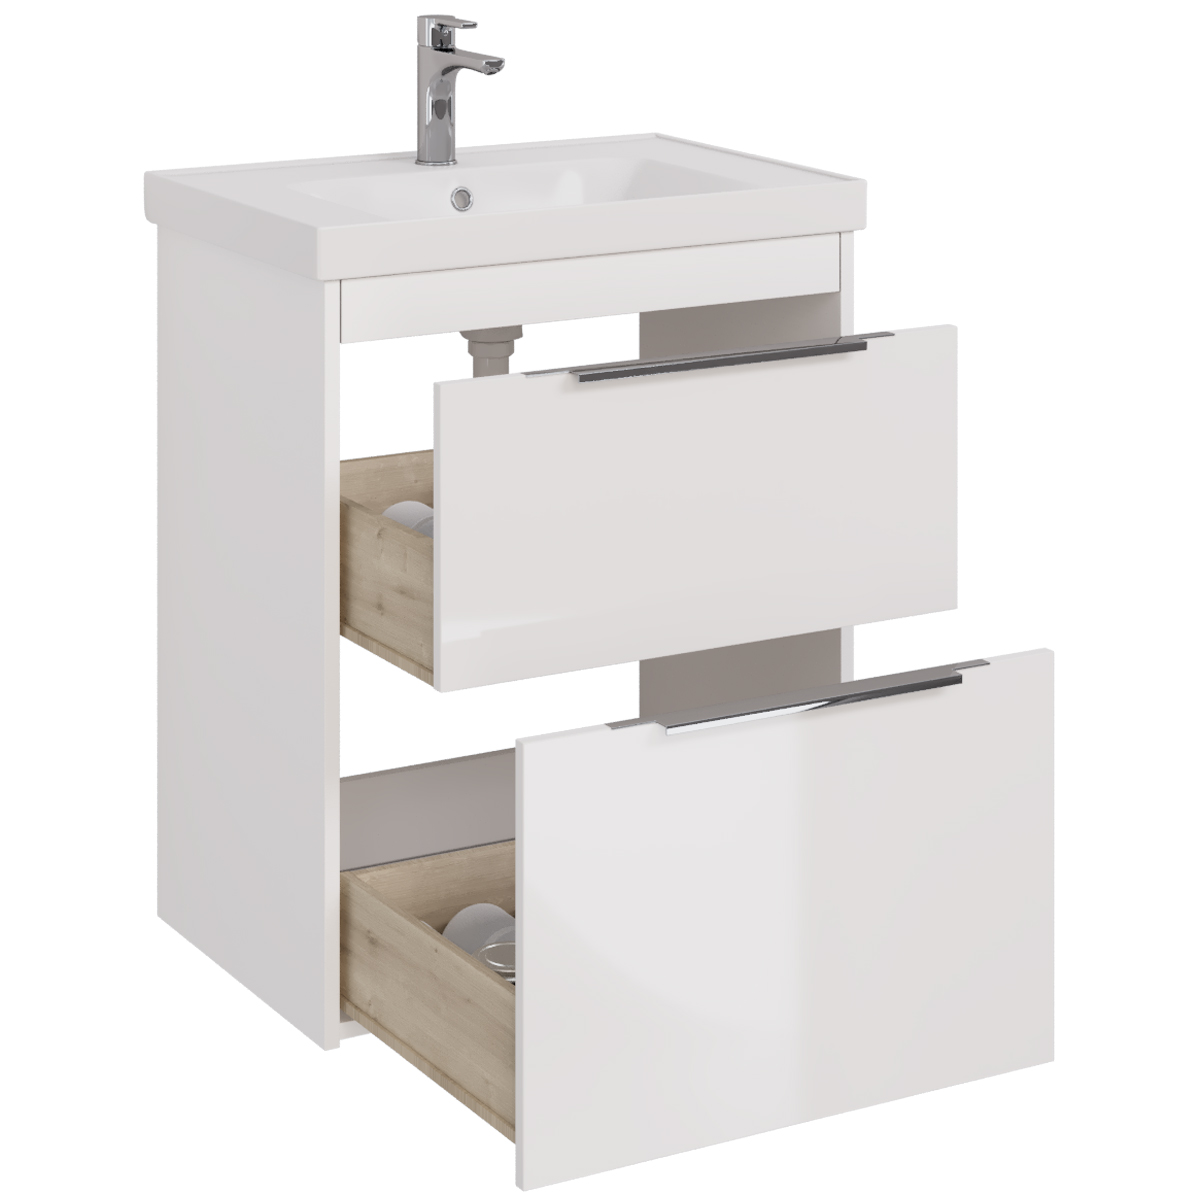 Мебель для ванной Dreja Prime 70 см белый глянец